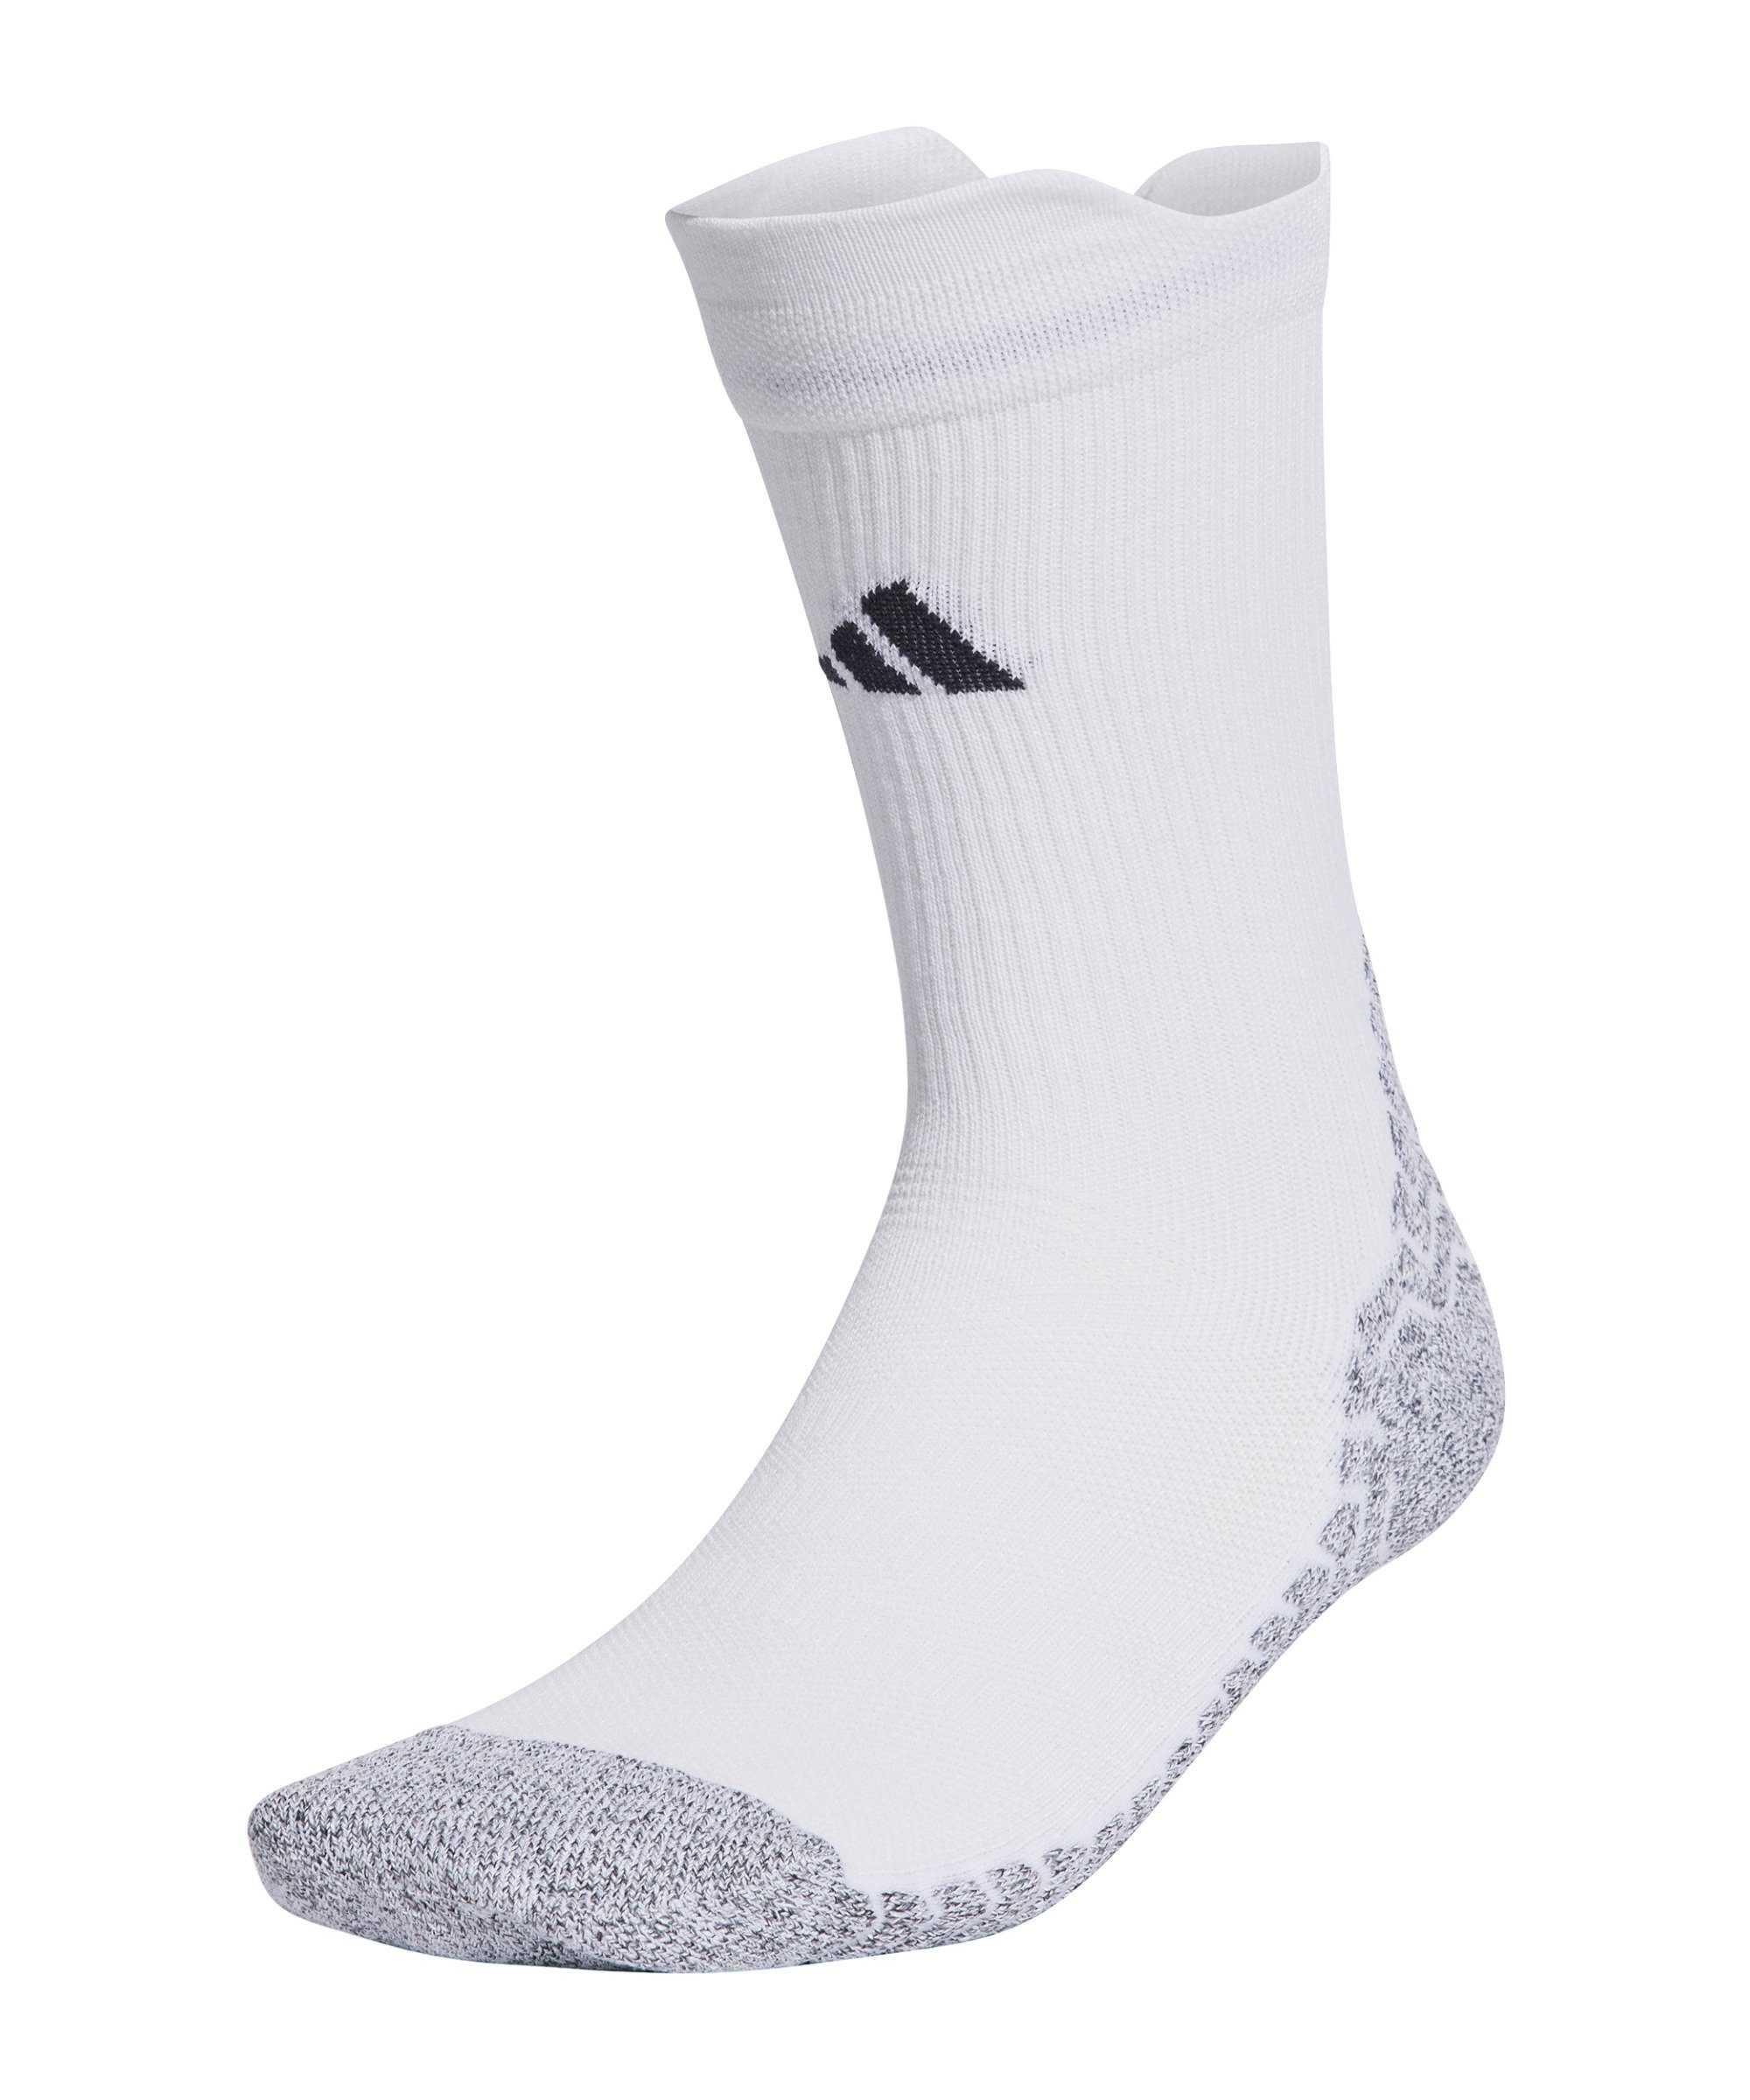 adidas Performance Sportsocken Grip Socken default weissschwarz